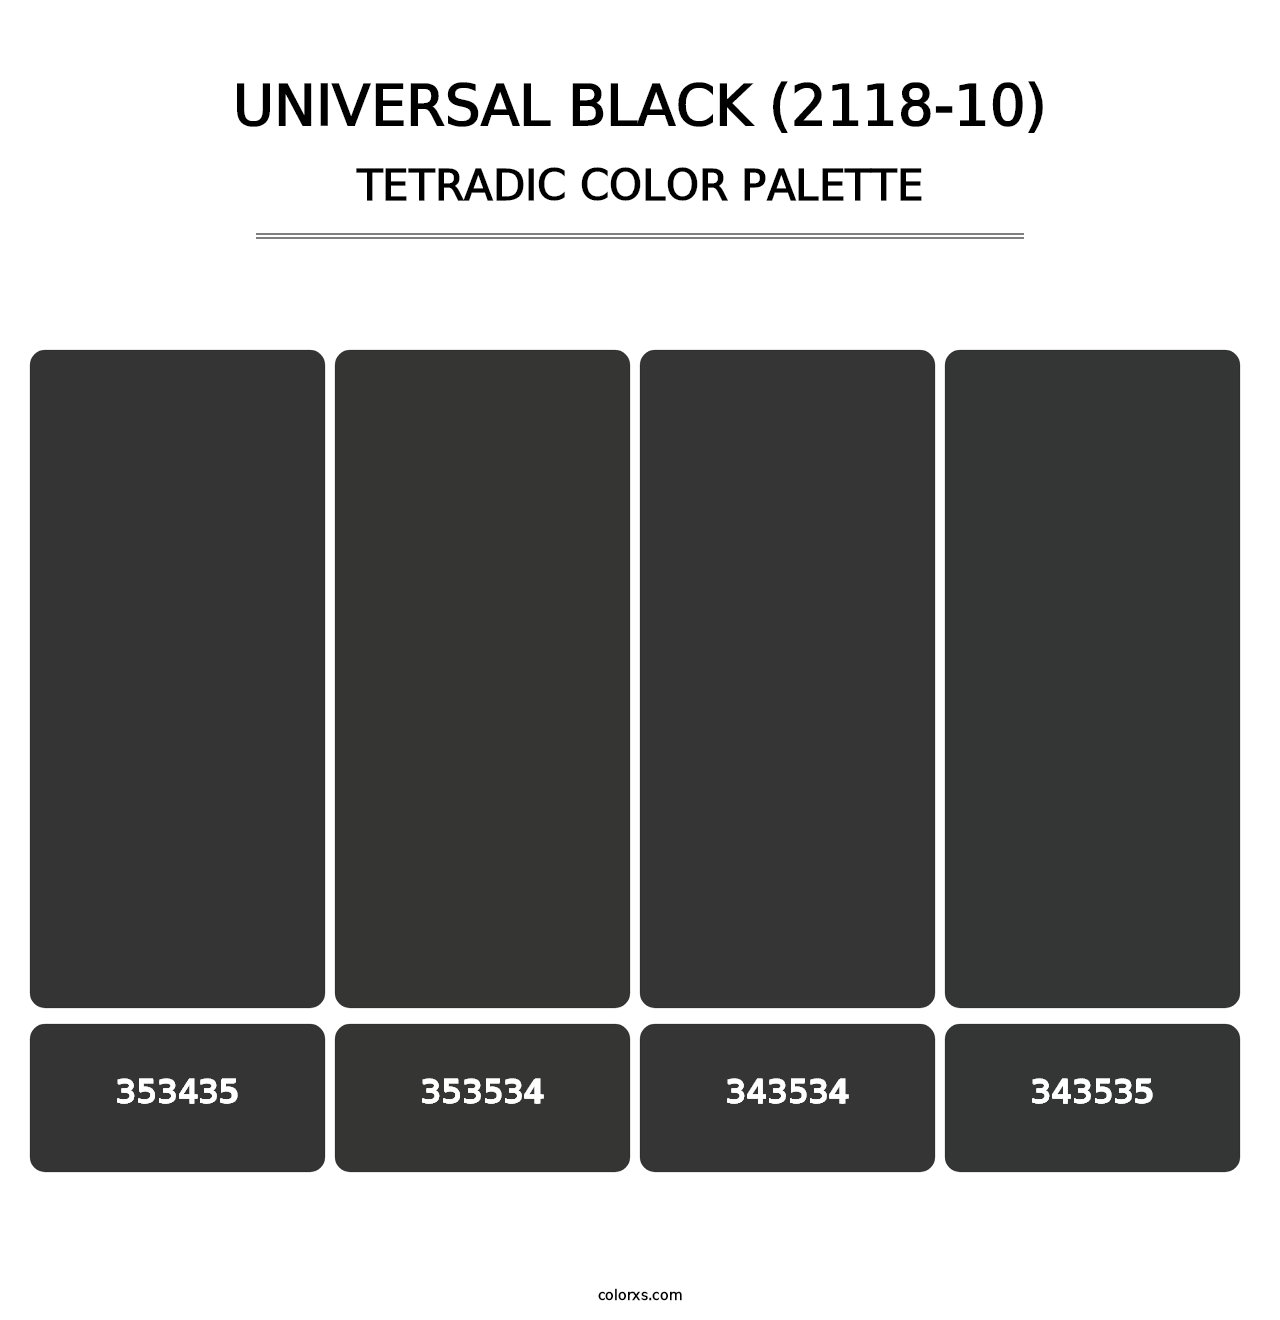 Universal Black (2118-10) - Tetradic Color Palette